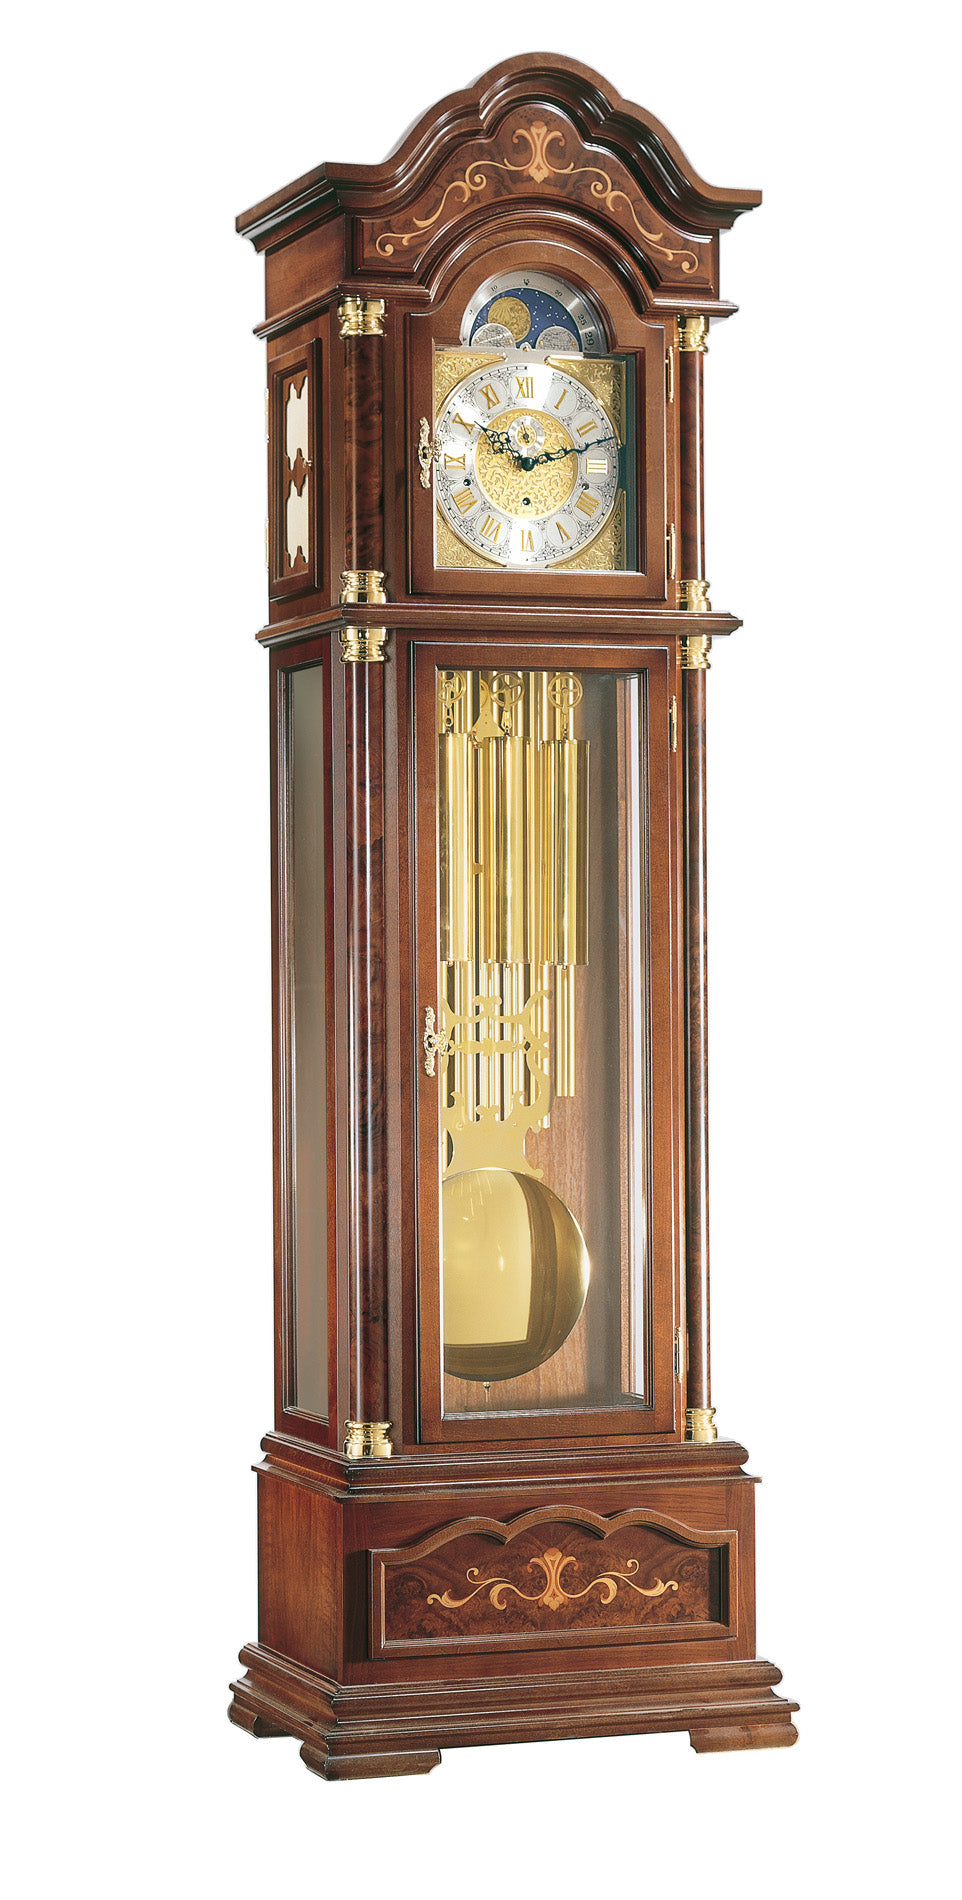 Biltmore Grandfather Clock by Hermle Clocks